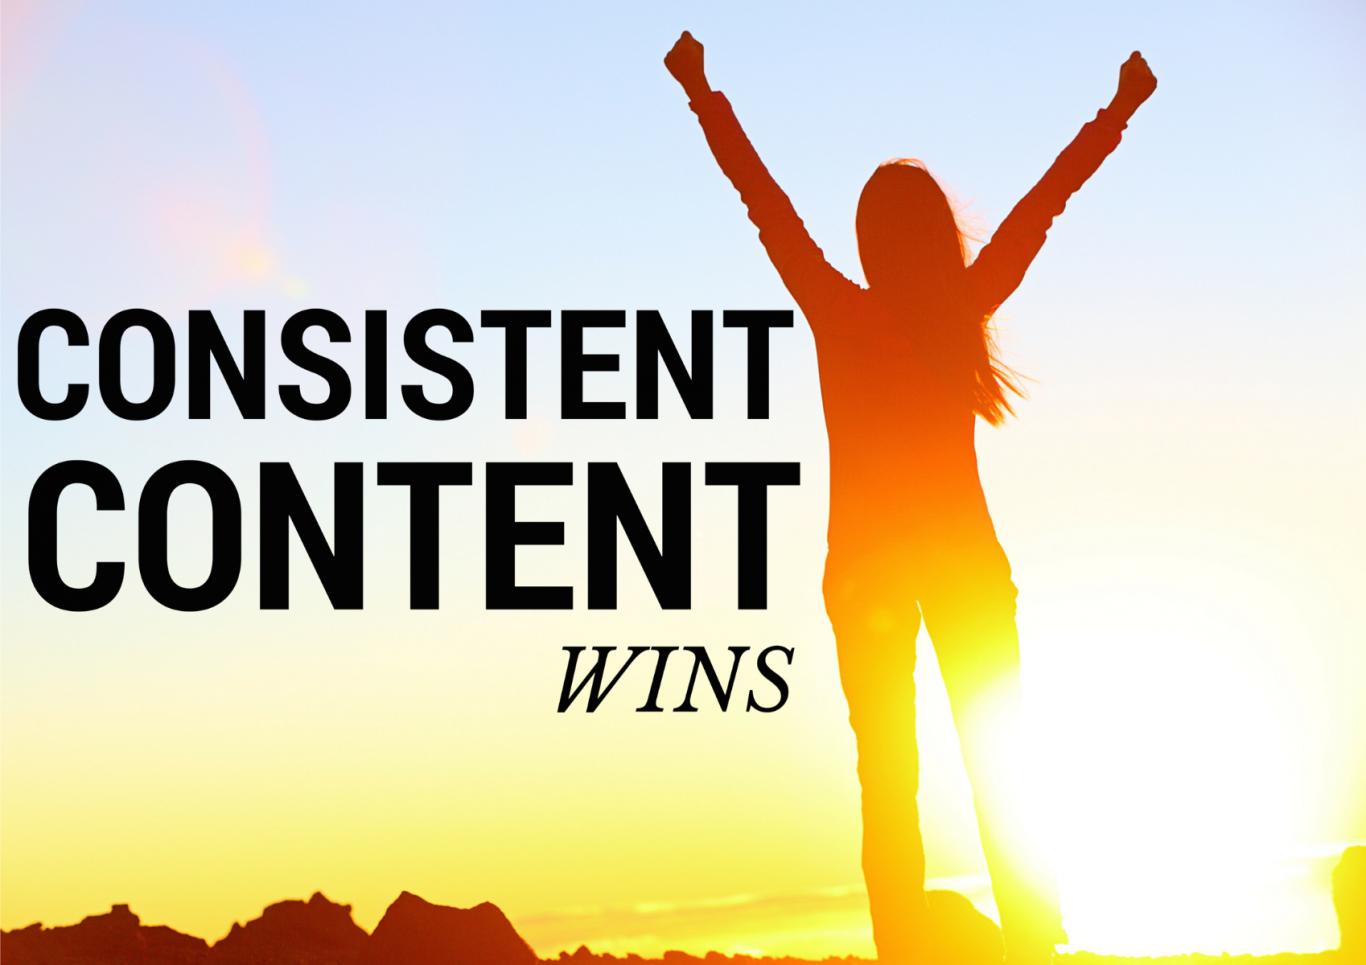 Consistent Content Wins